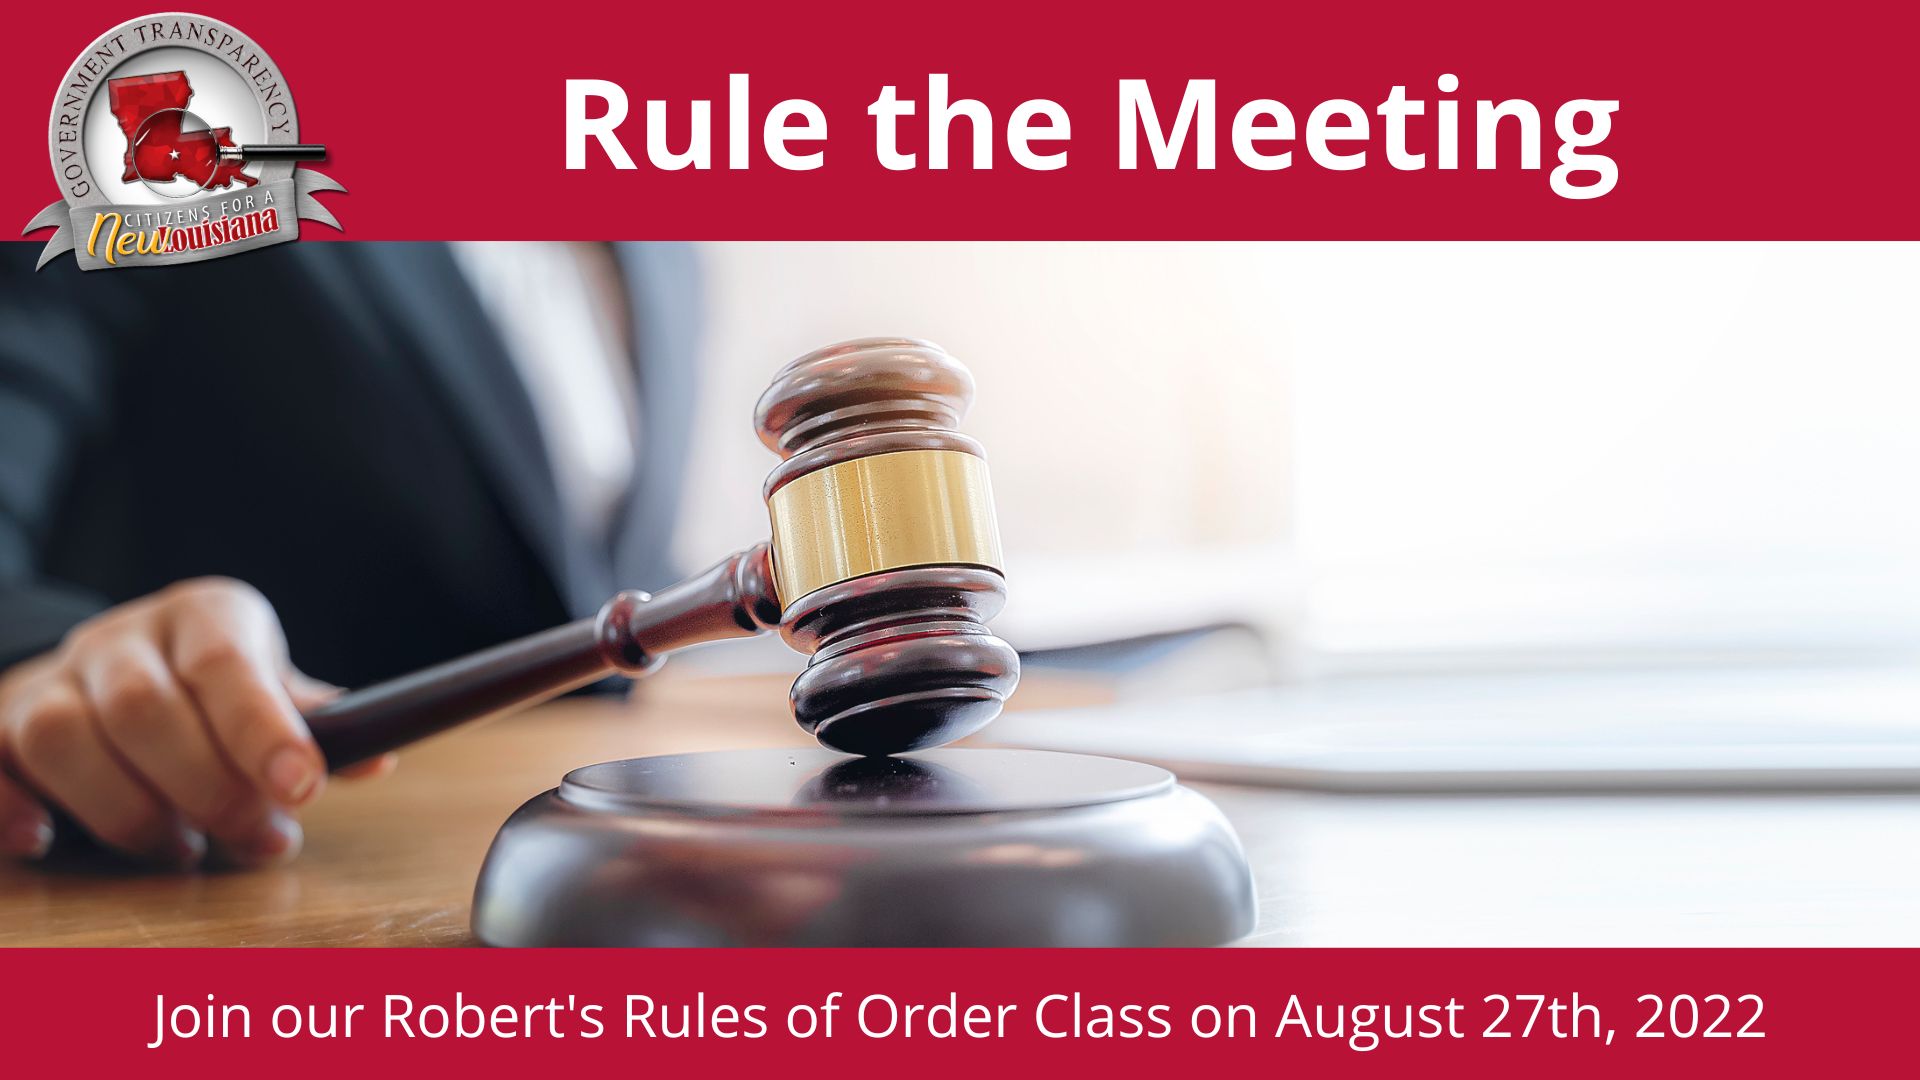 Robert's Rules of Order Class